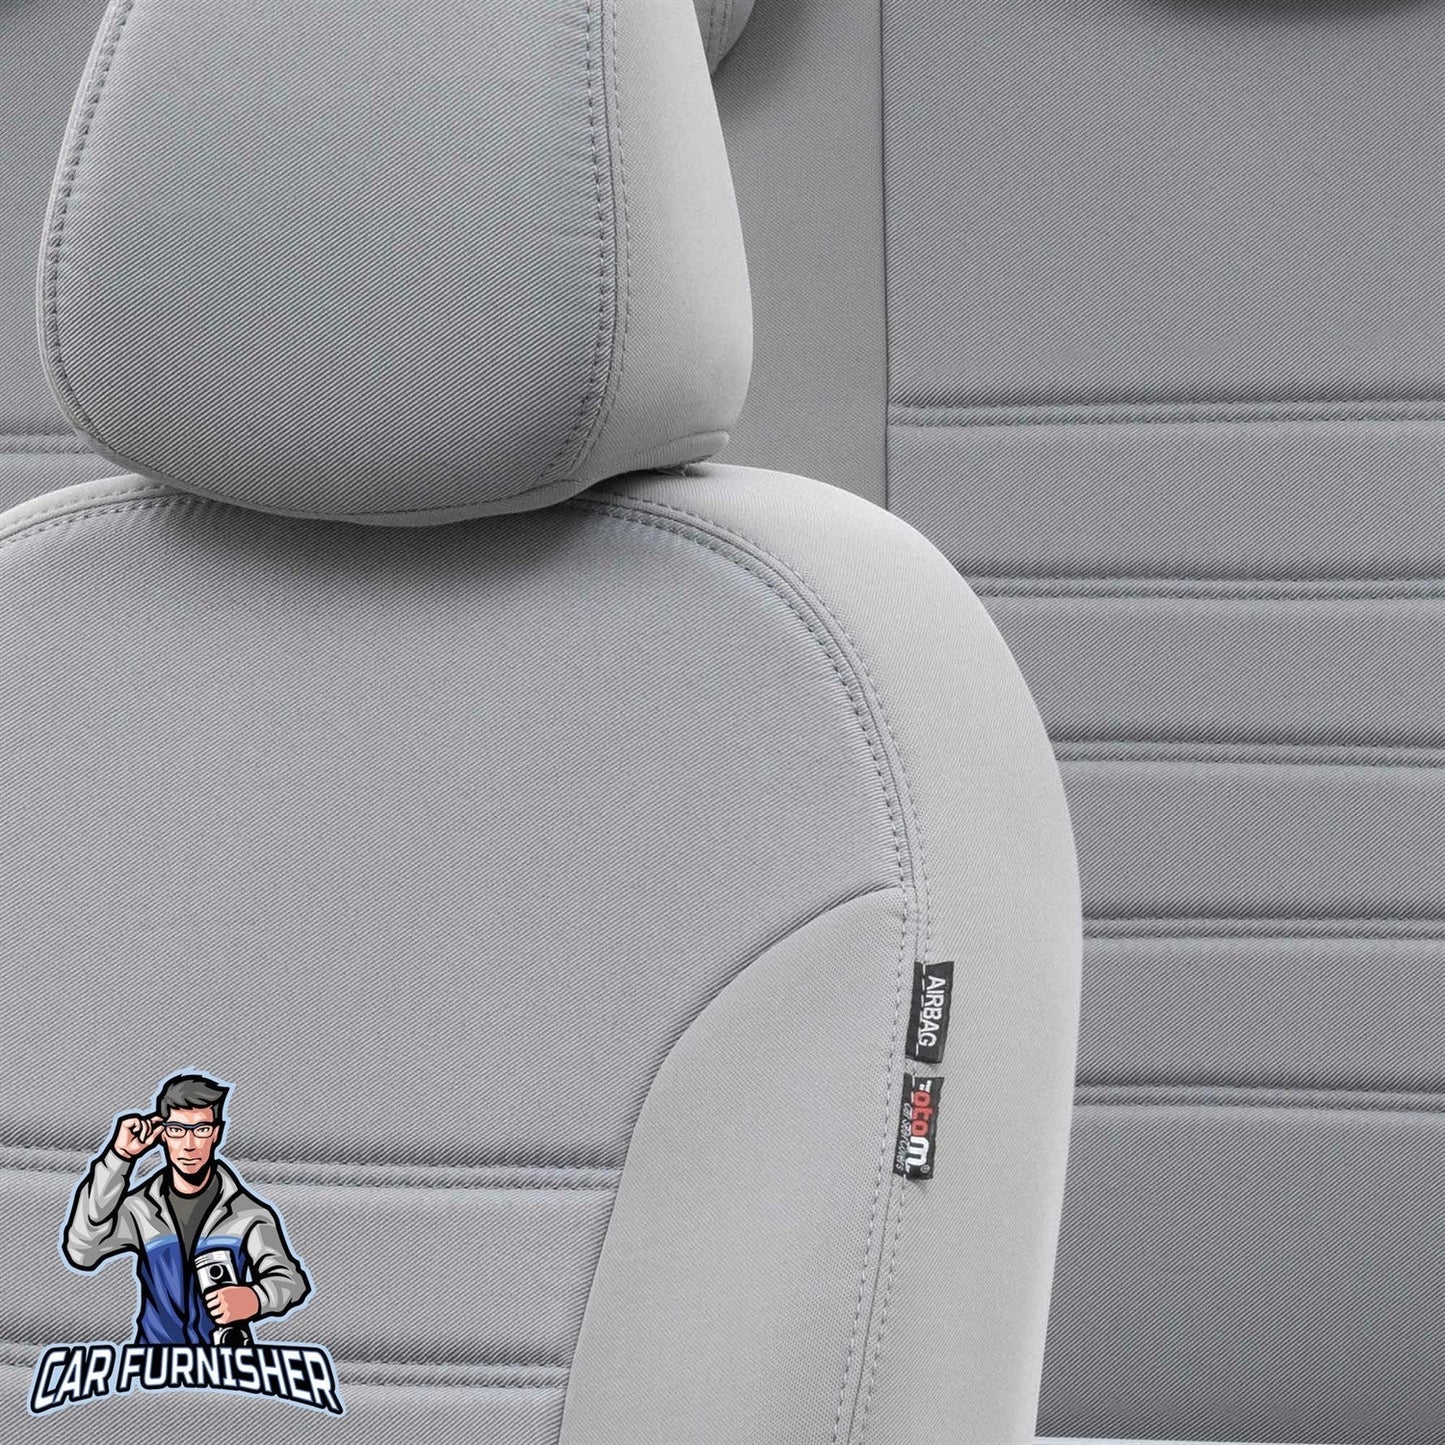 Ford Transit Seat Covers Original Jacquard Design Light Gray Jacquard Fabric